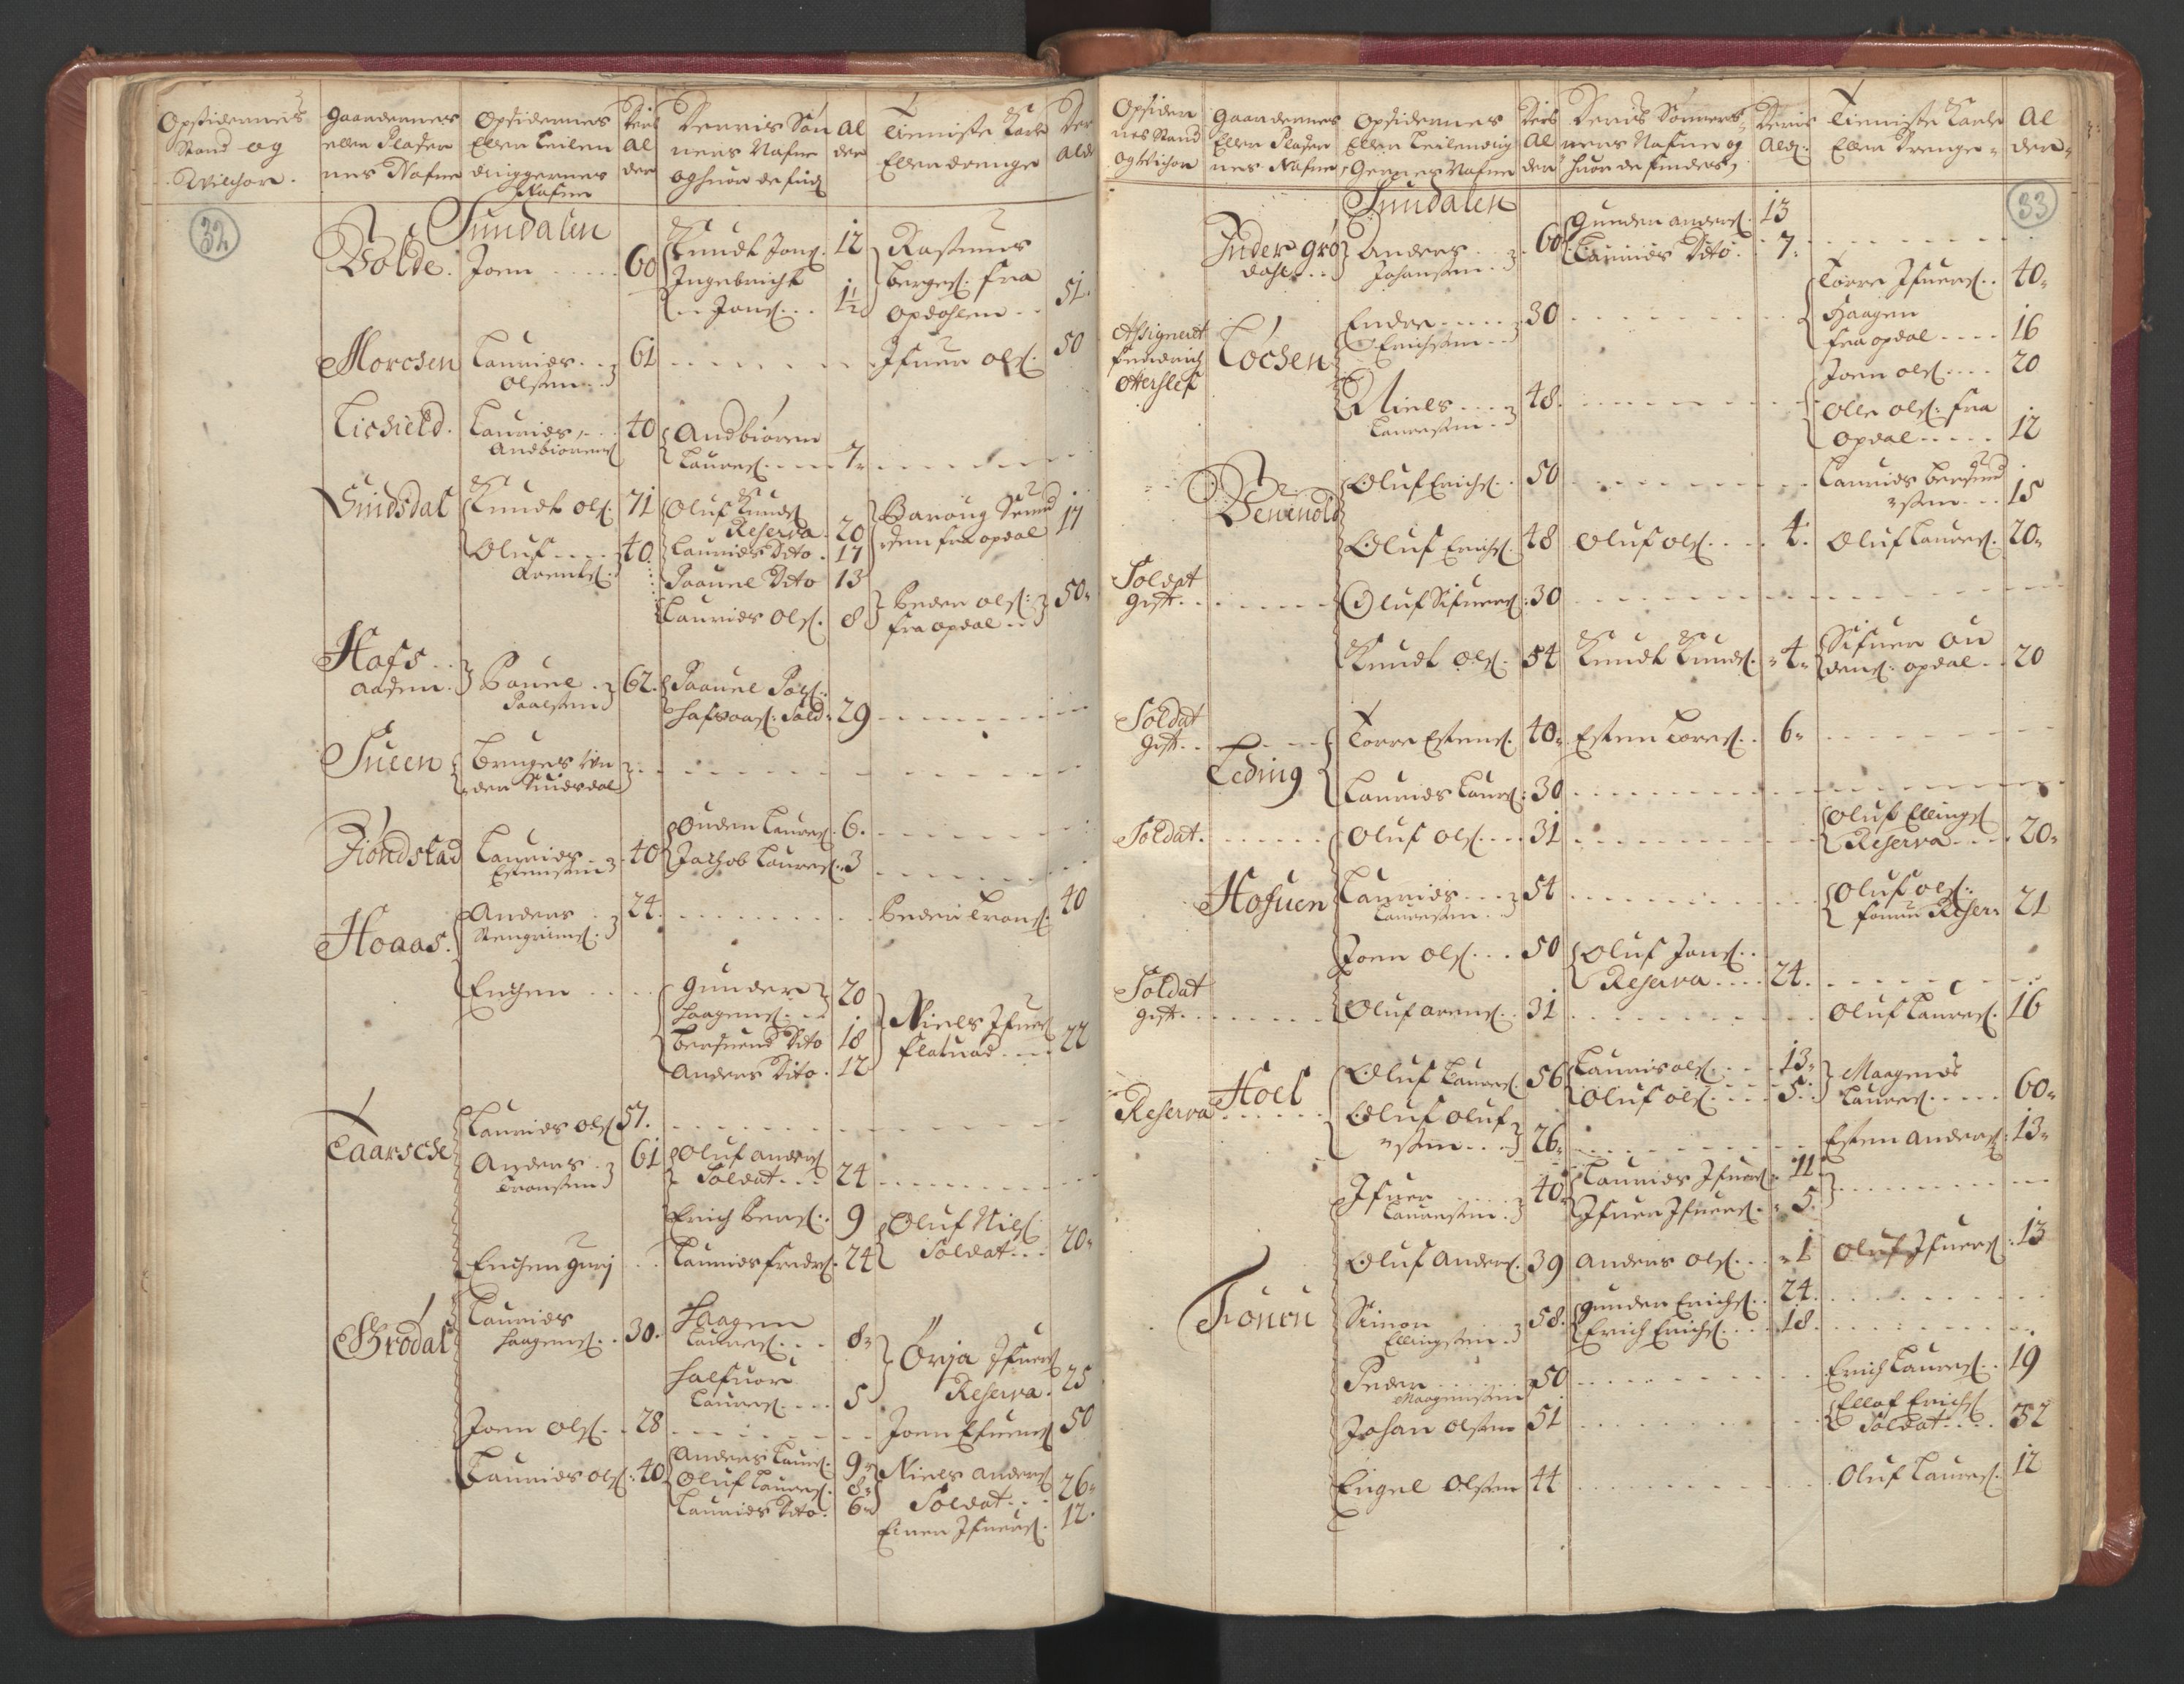 RA, Manntallet 1701, nr. 11: Nordmøre fogderi og Romsdal fogderi, 1701, s. 32-33